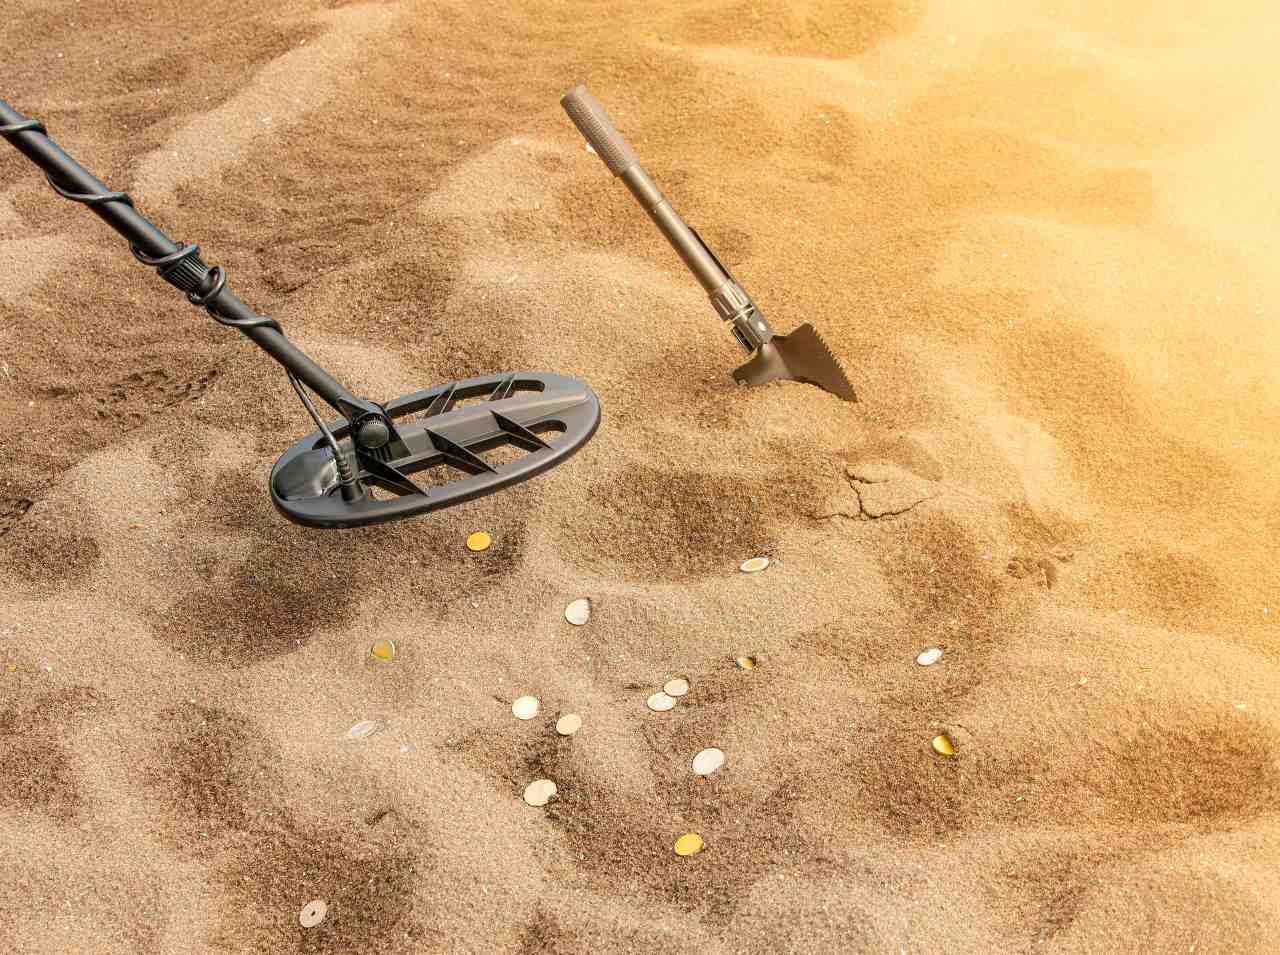 metal detector and a shovel on sand